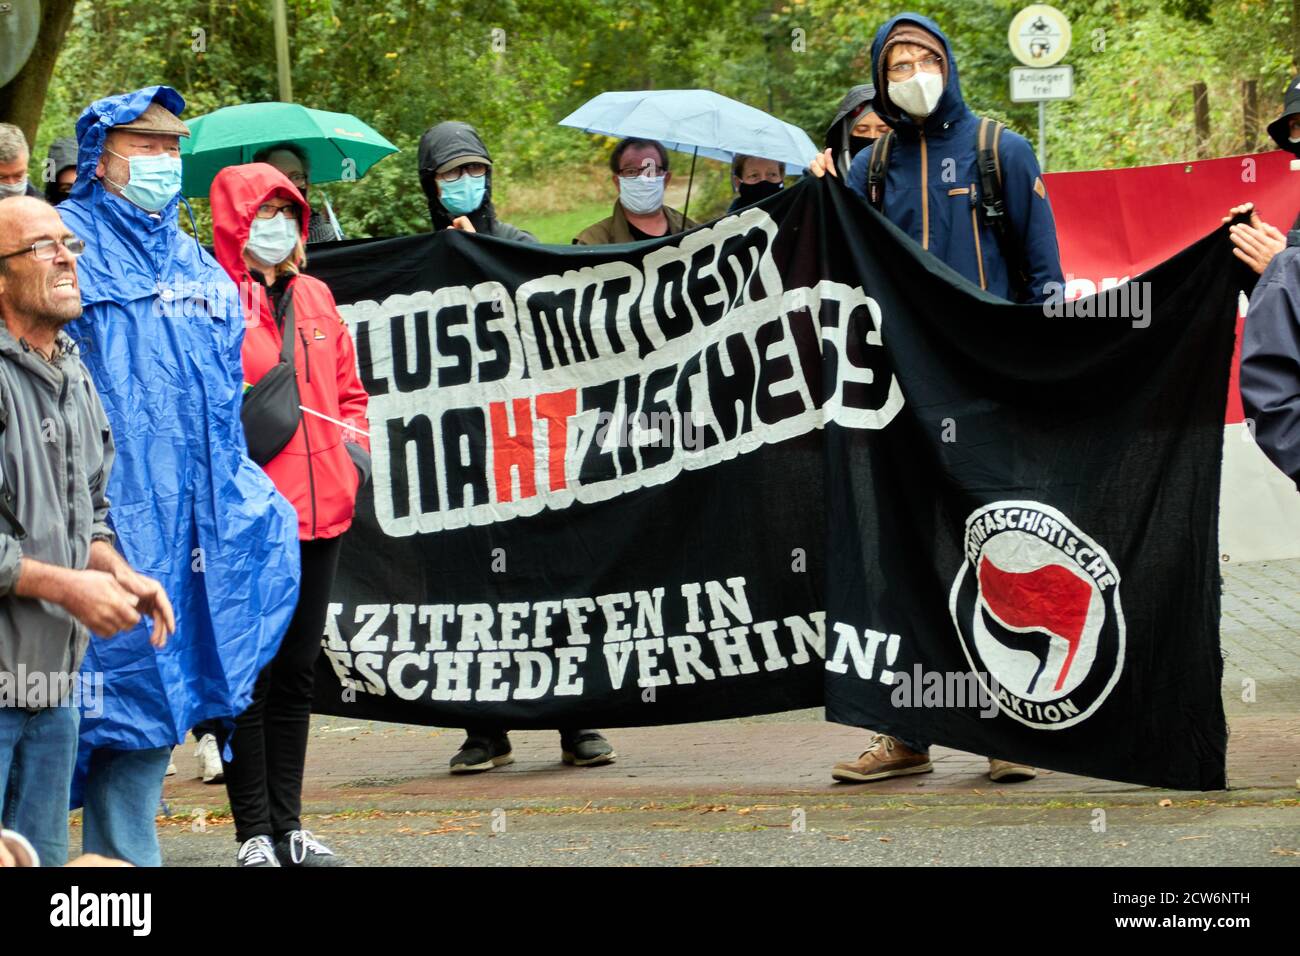 Eschede, 26. September 2020: Demonstranten mit Plakat gegen rechtsradikale, Faschisten und Nazis Stockfoto